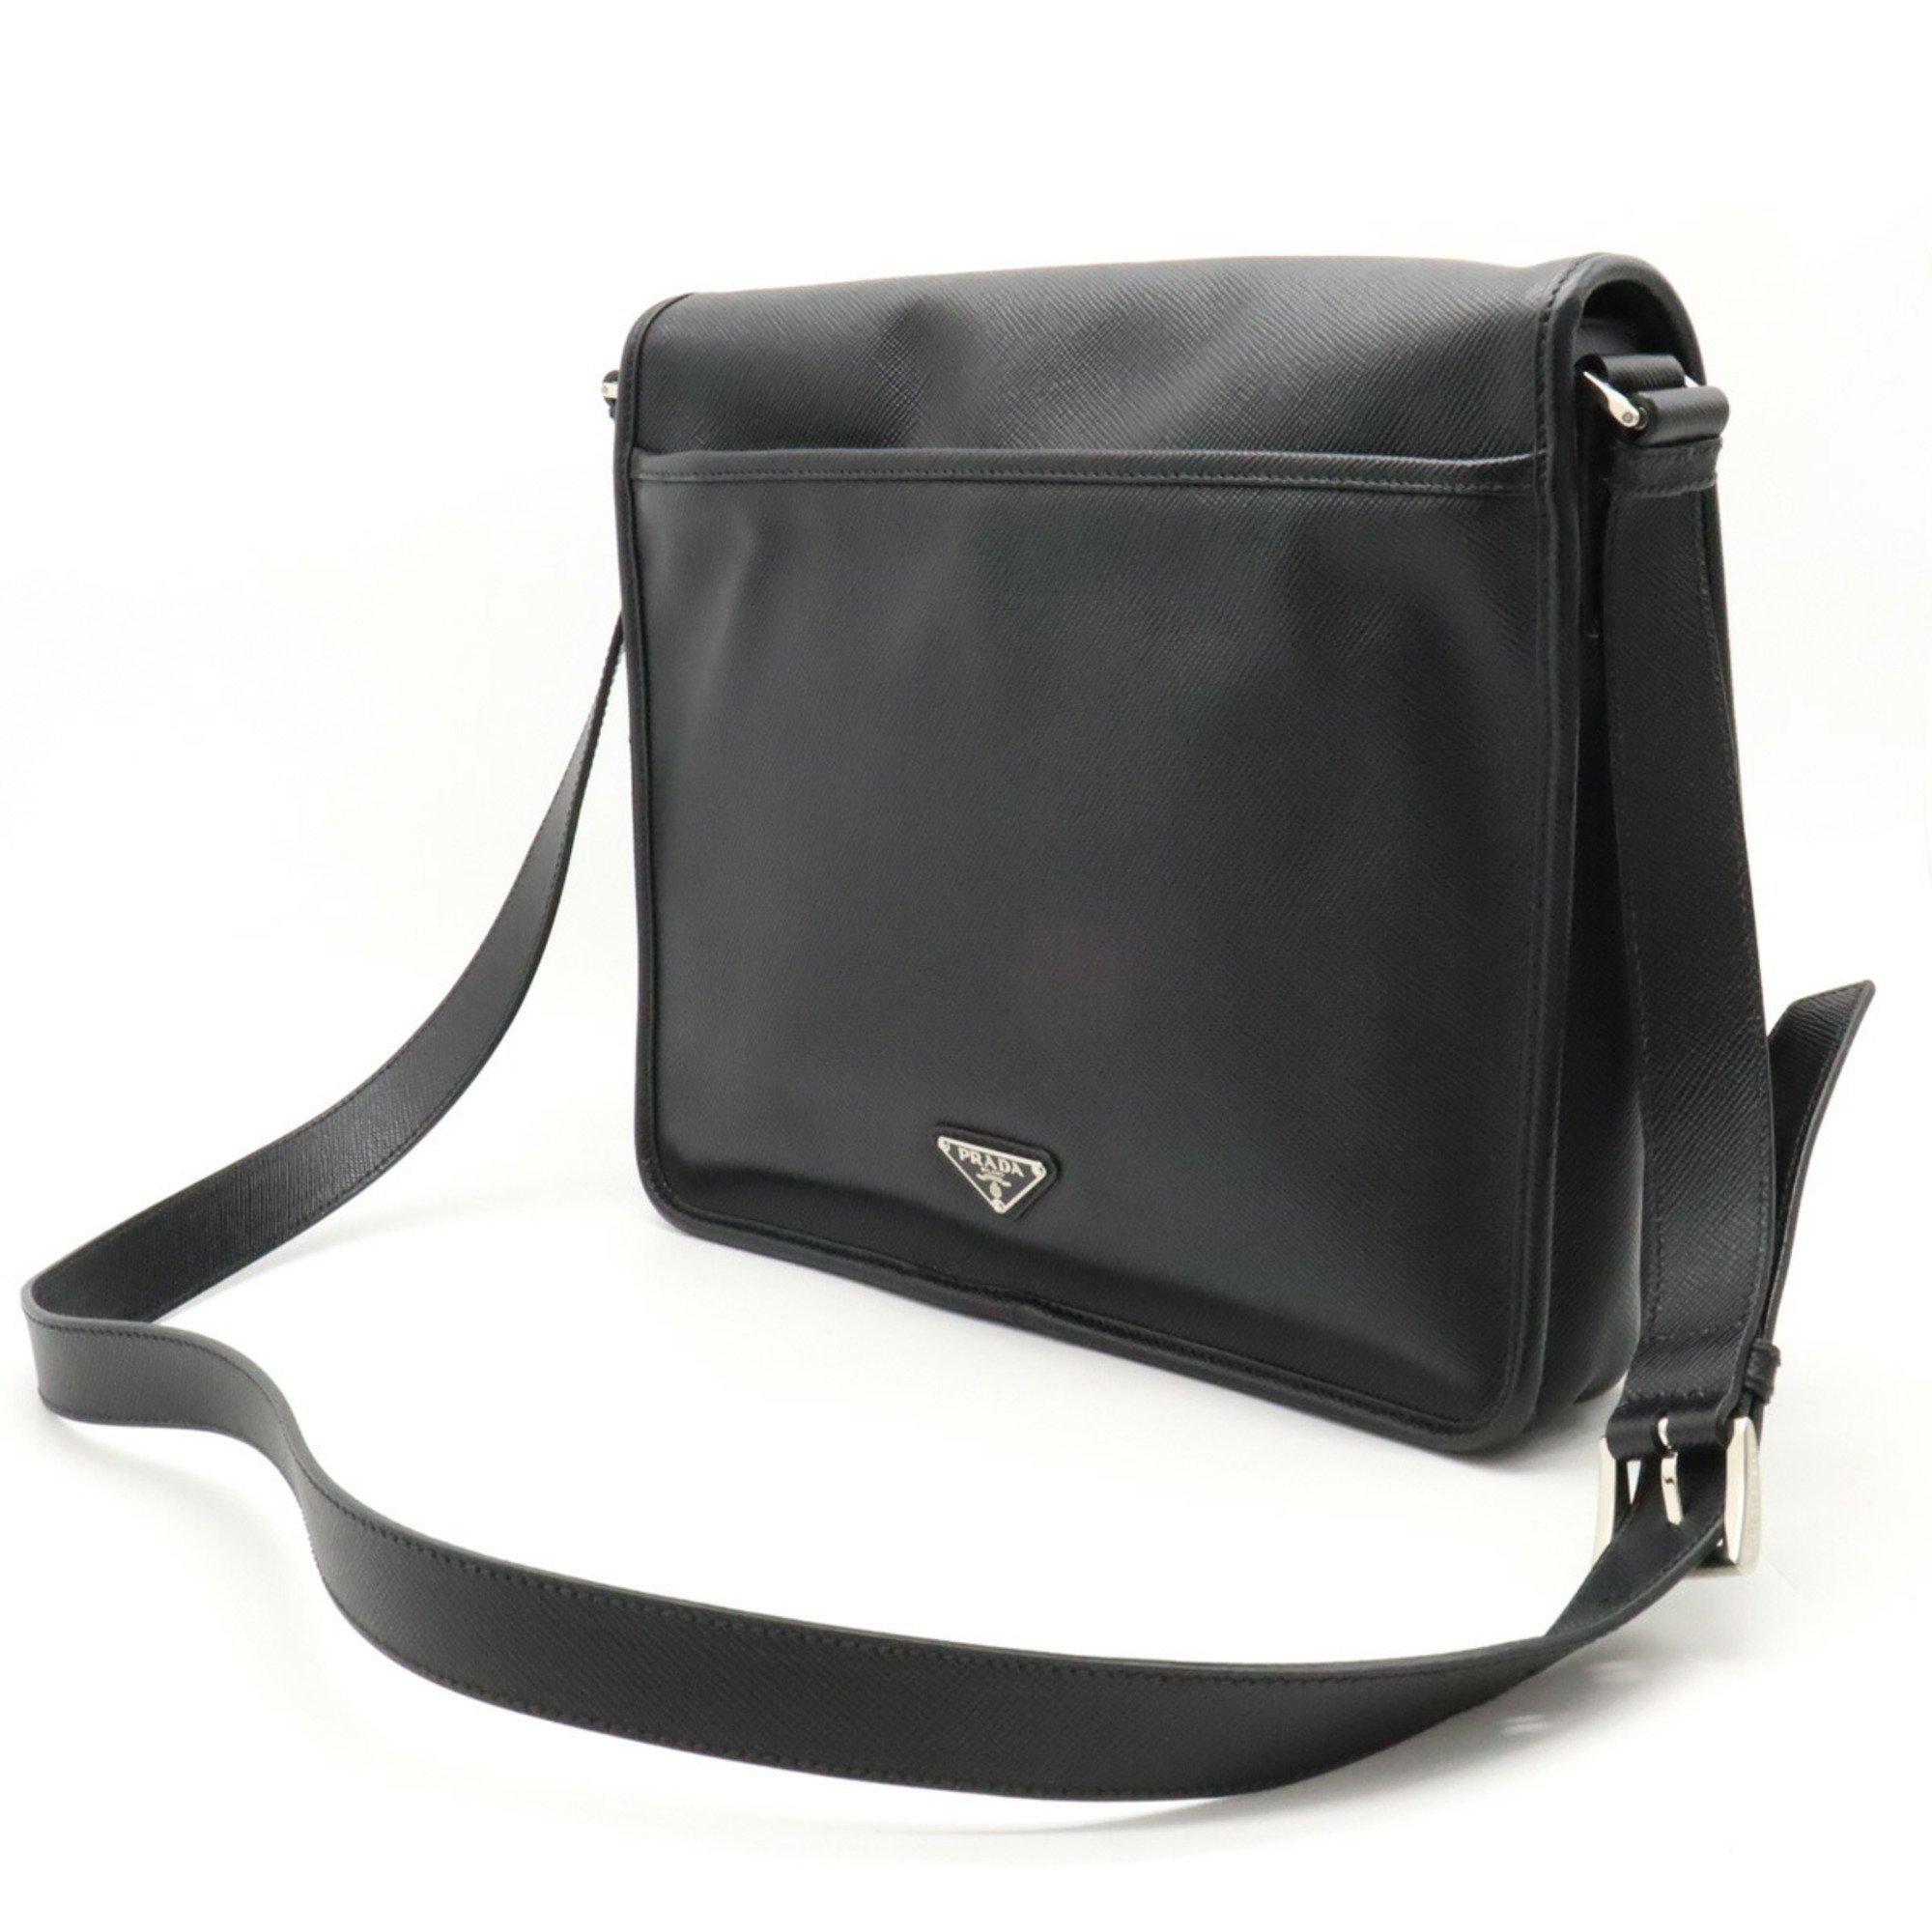 PRADA Prada SAFFIANO shoulder bag leather NERO black VA0982